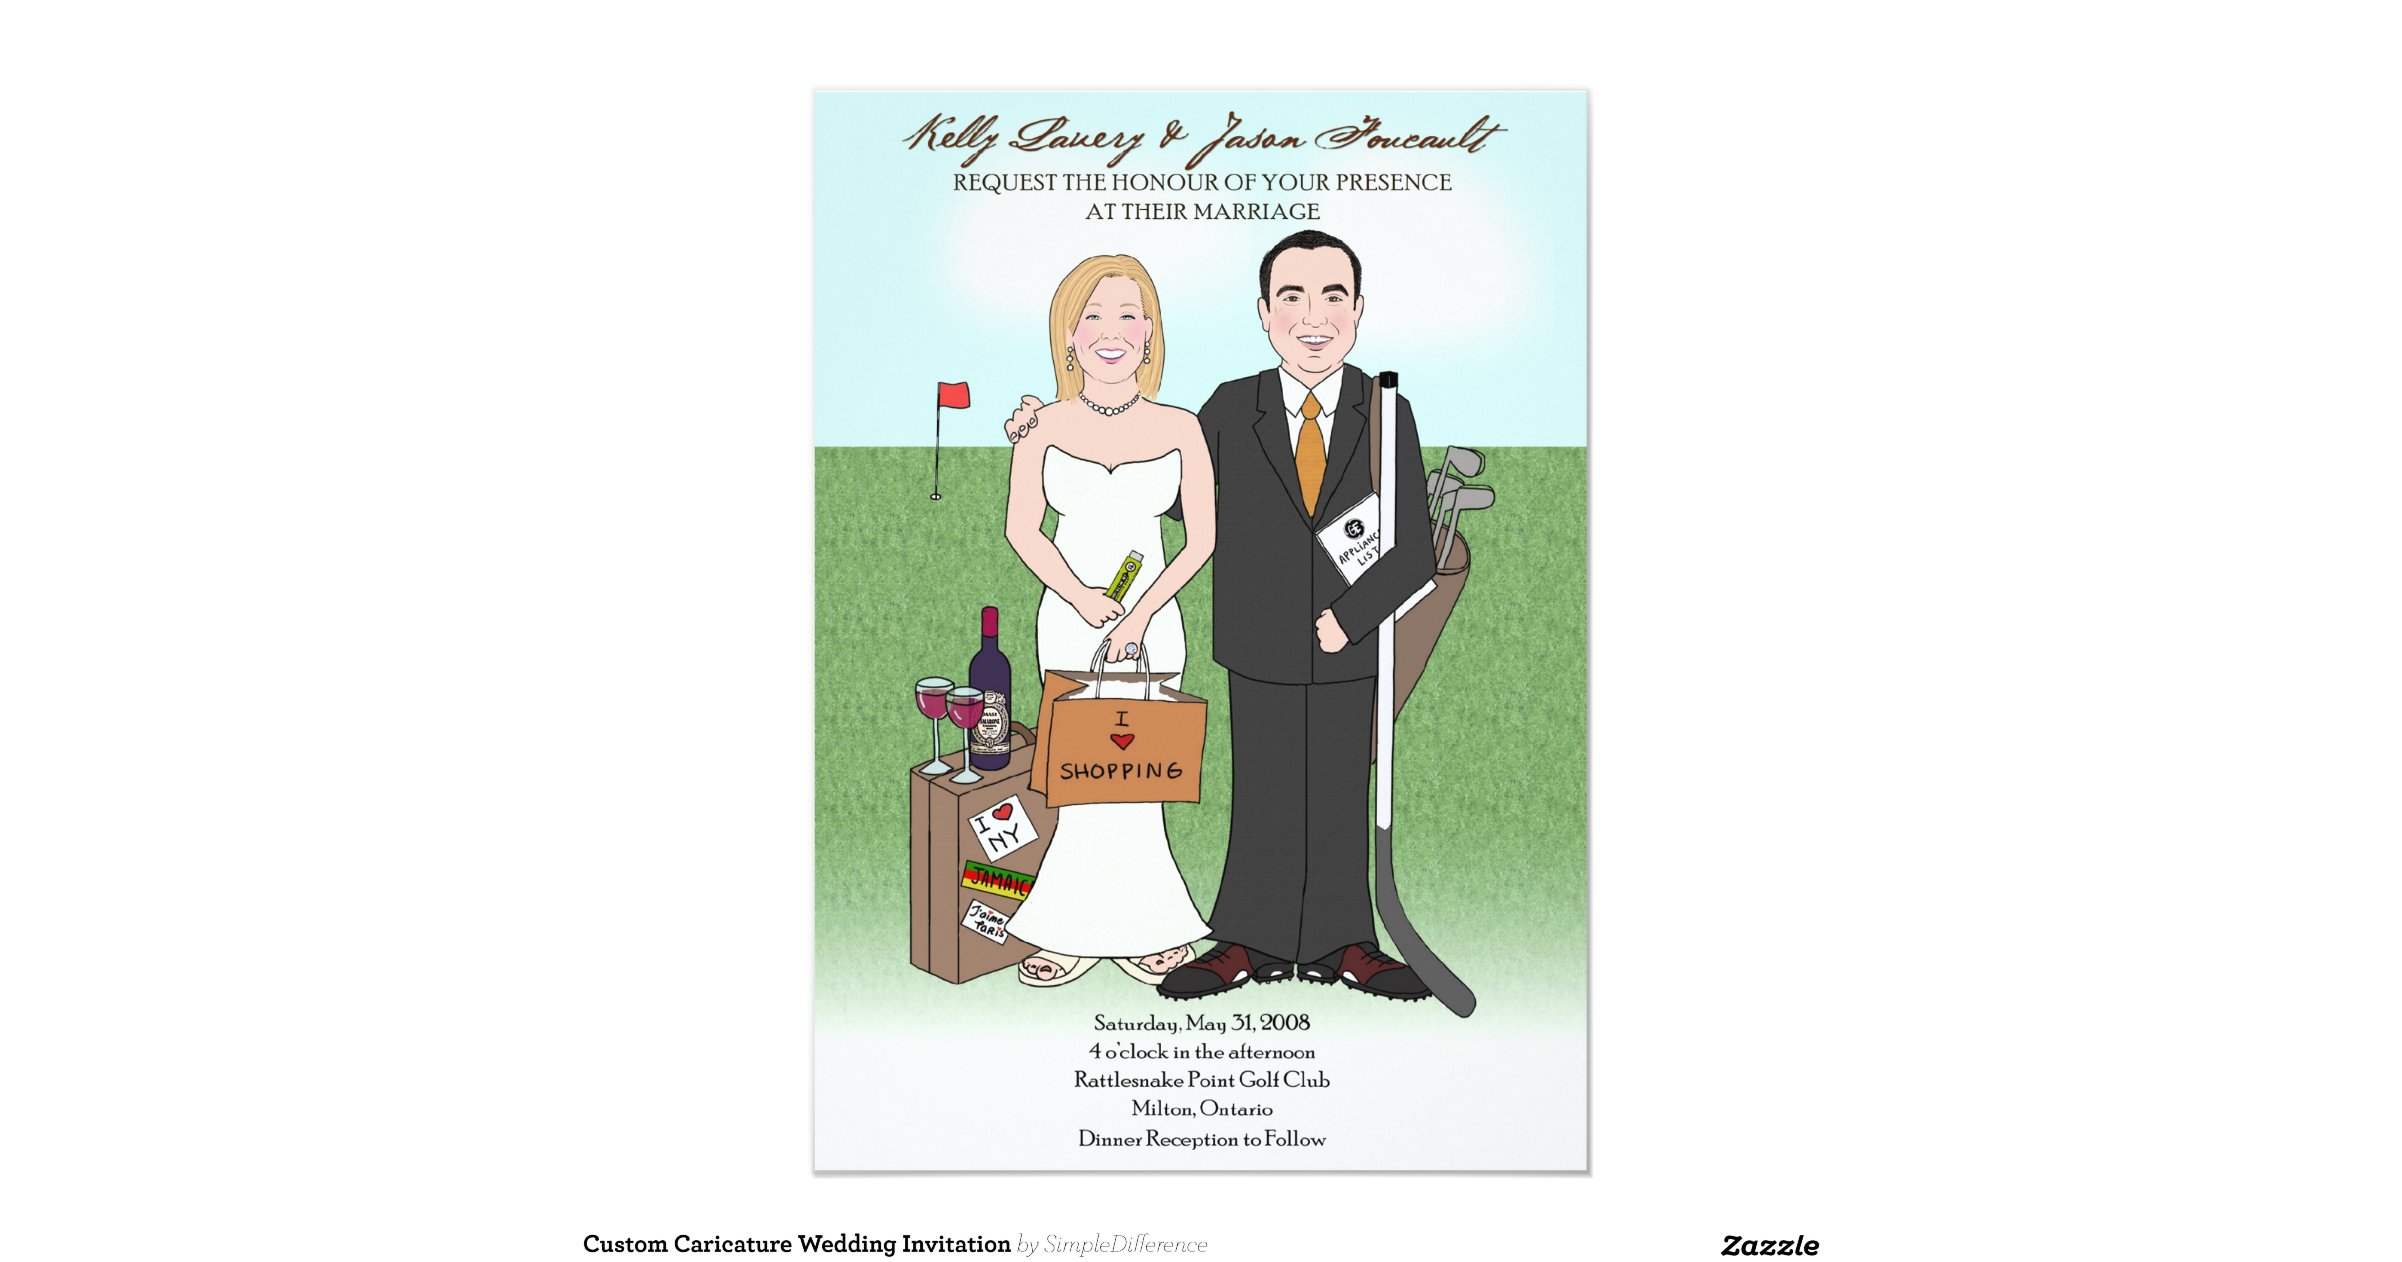 custom-caricature-wedding-invitation-r0cf134ab5c924126a12a8a6bf2e2bc70